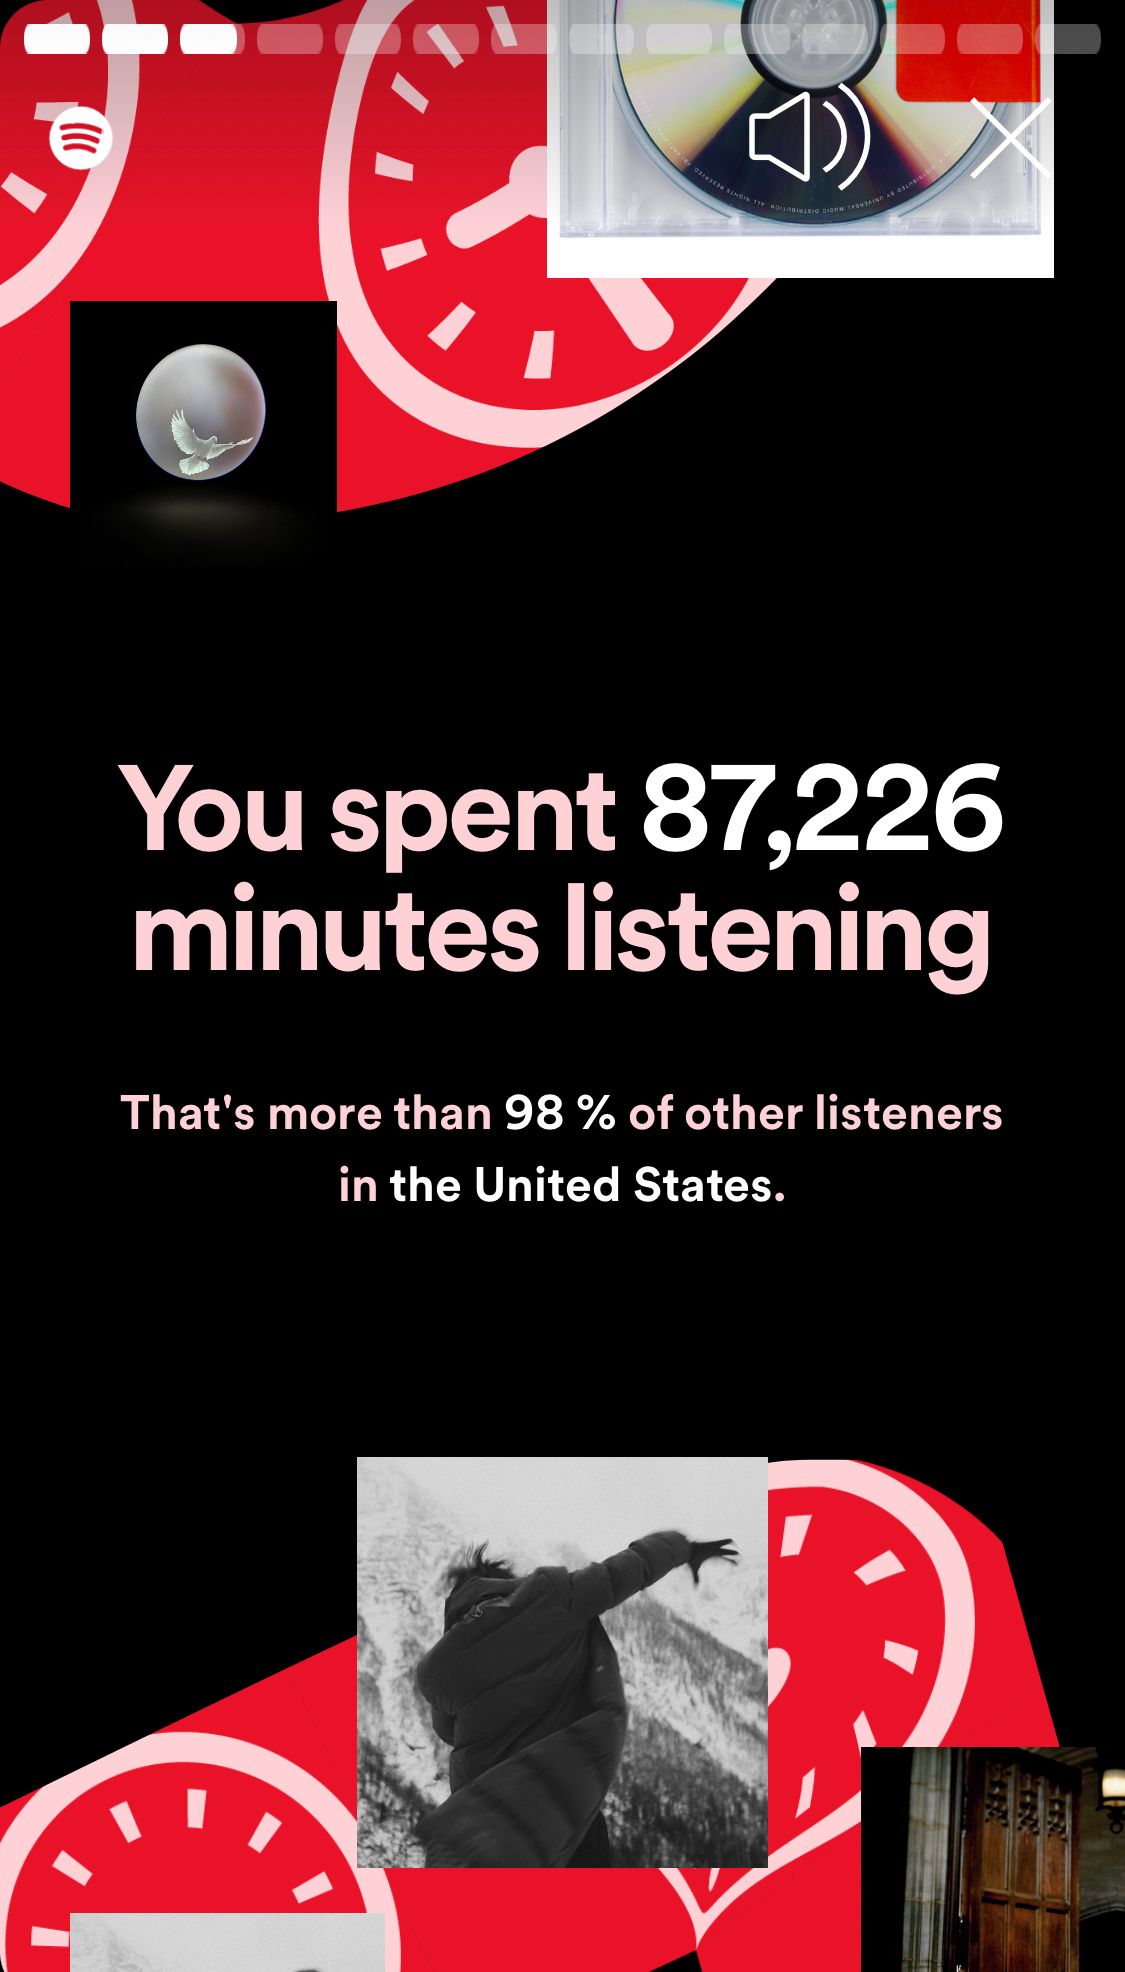 My spotify listening stats: 87,000 minutes listening.